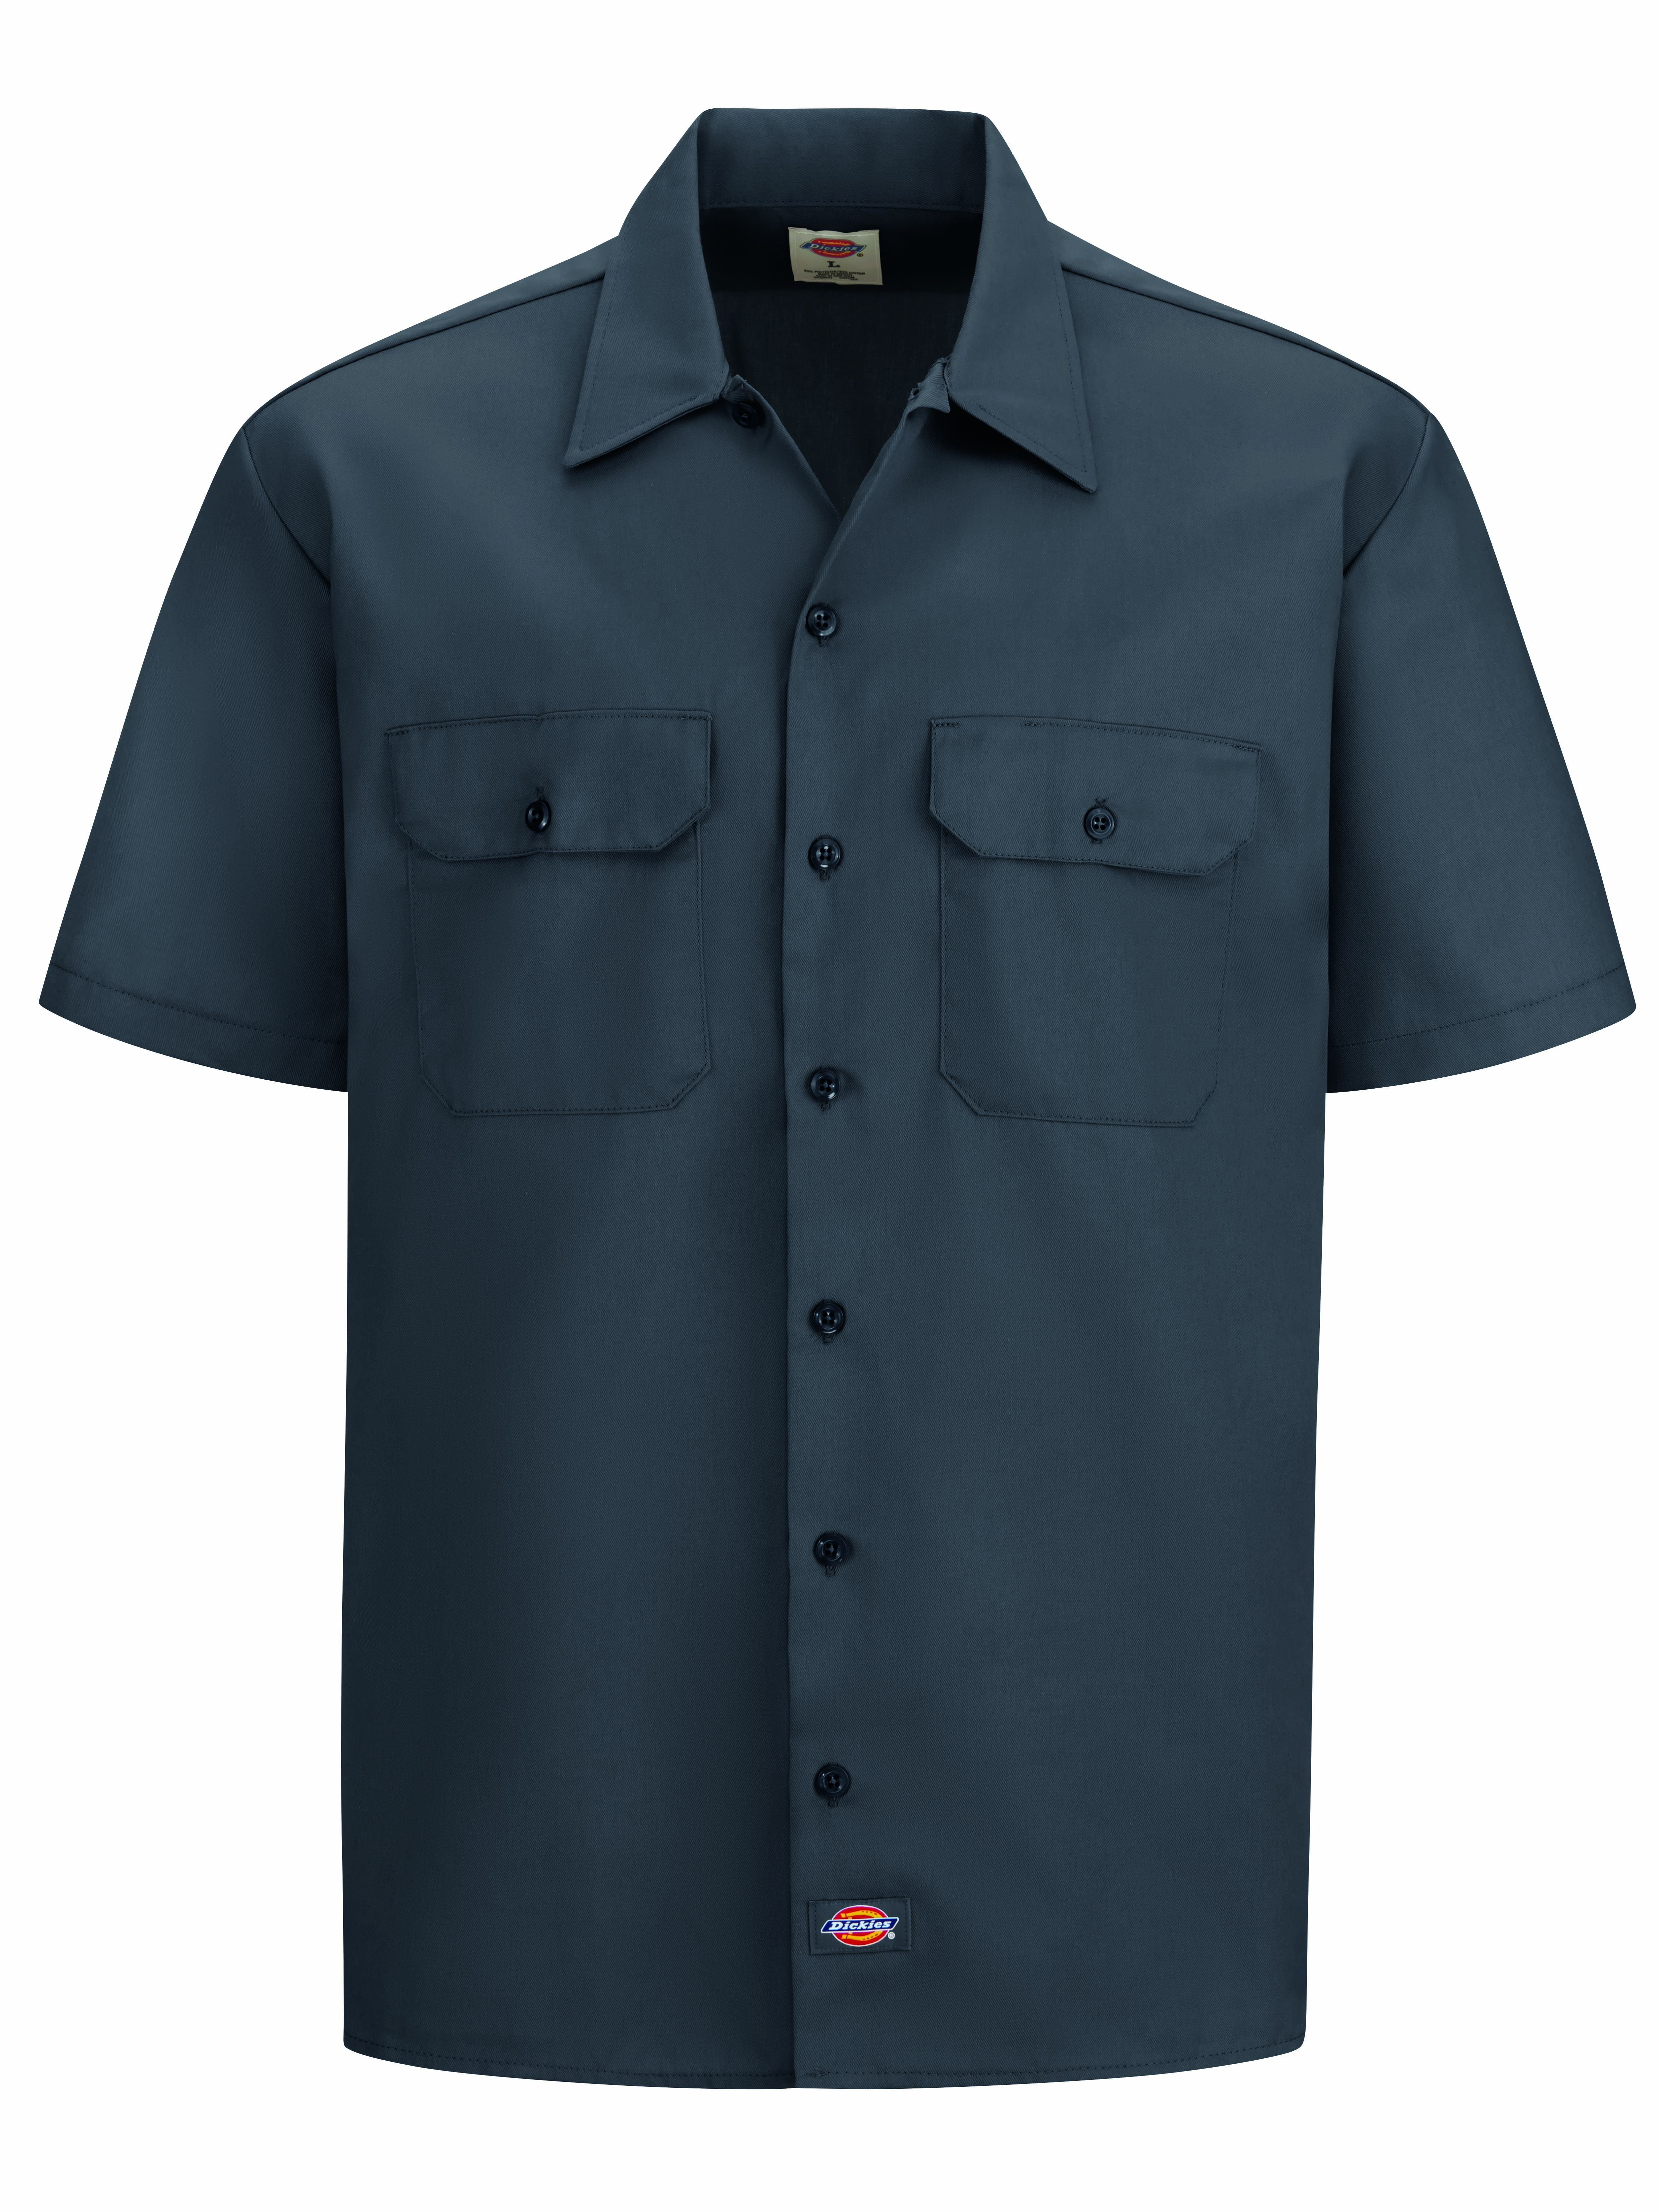 Men's Short-Sleeve Traditional Work Shirt